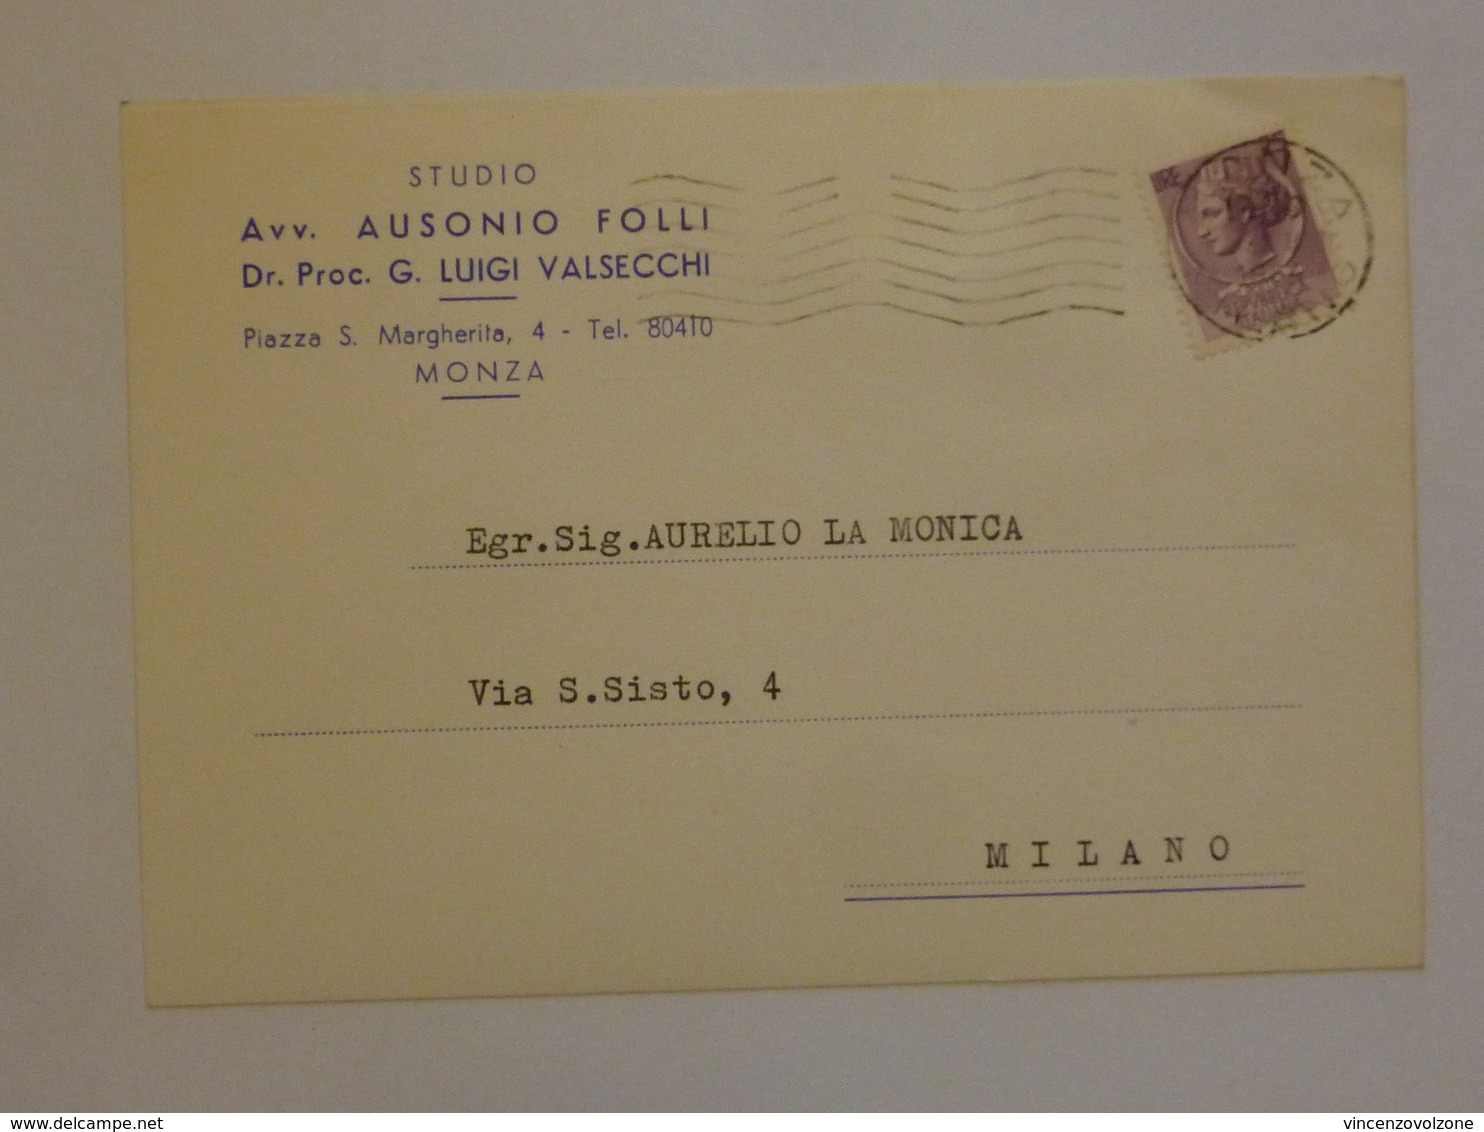 Cartolina Postale Viaggiata "Studio Avv. AUSONIO FOLLI - LUIGI VALSECCHI MONZA" 1964 - 1961-70: Marcophilia